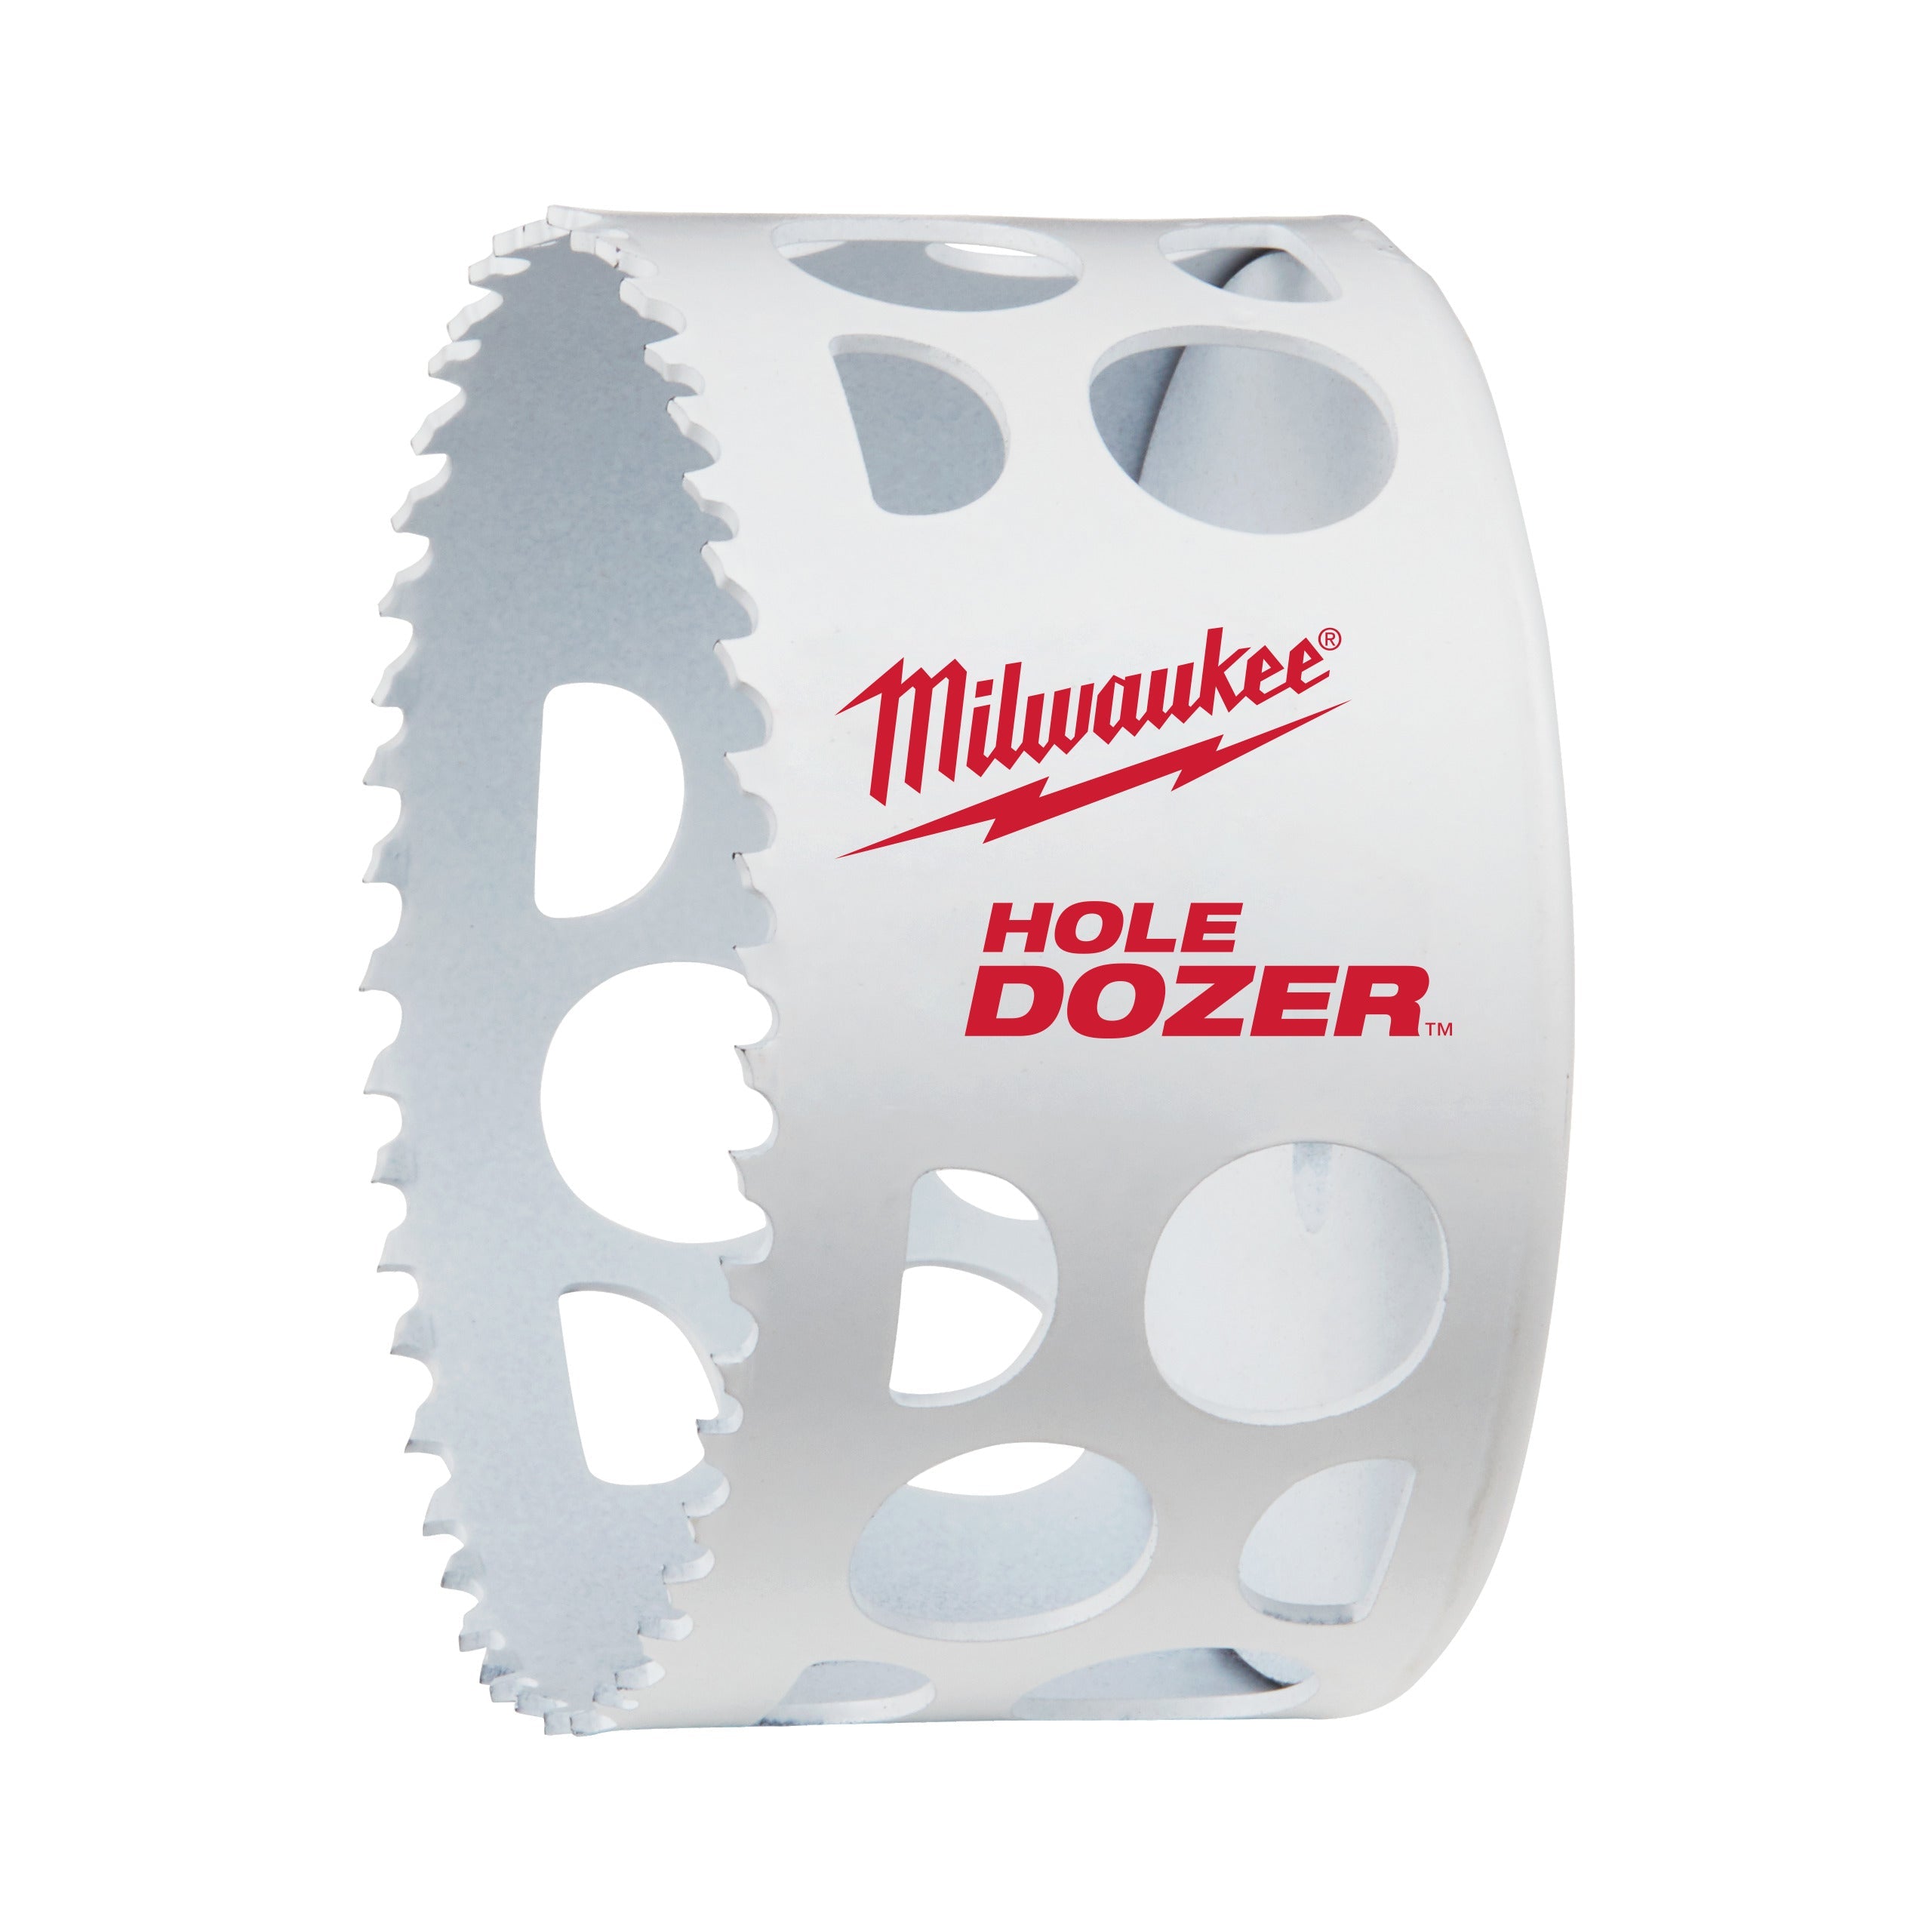 Carotă Milwaukee HOLE DOZER™ bi-metal HCS Ø86 mm, cod 49560187